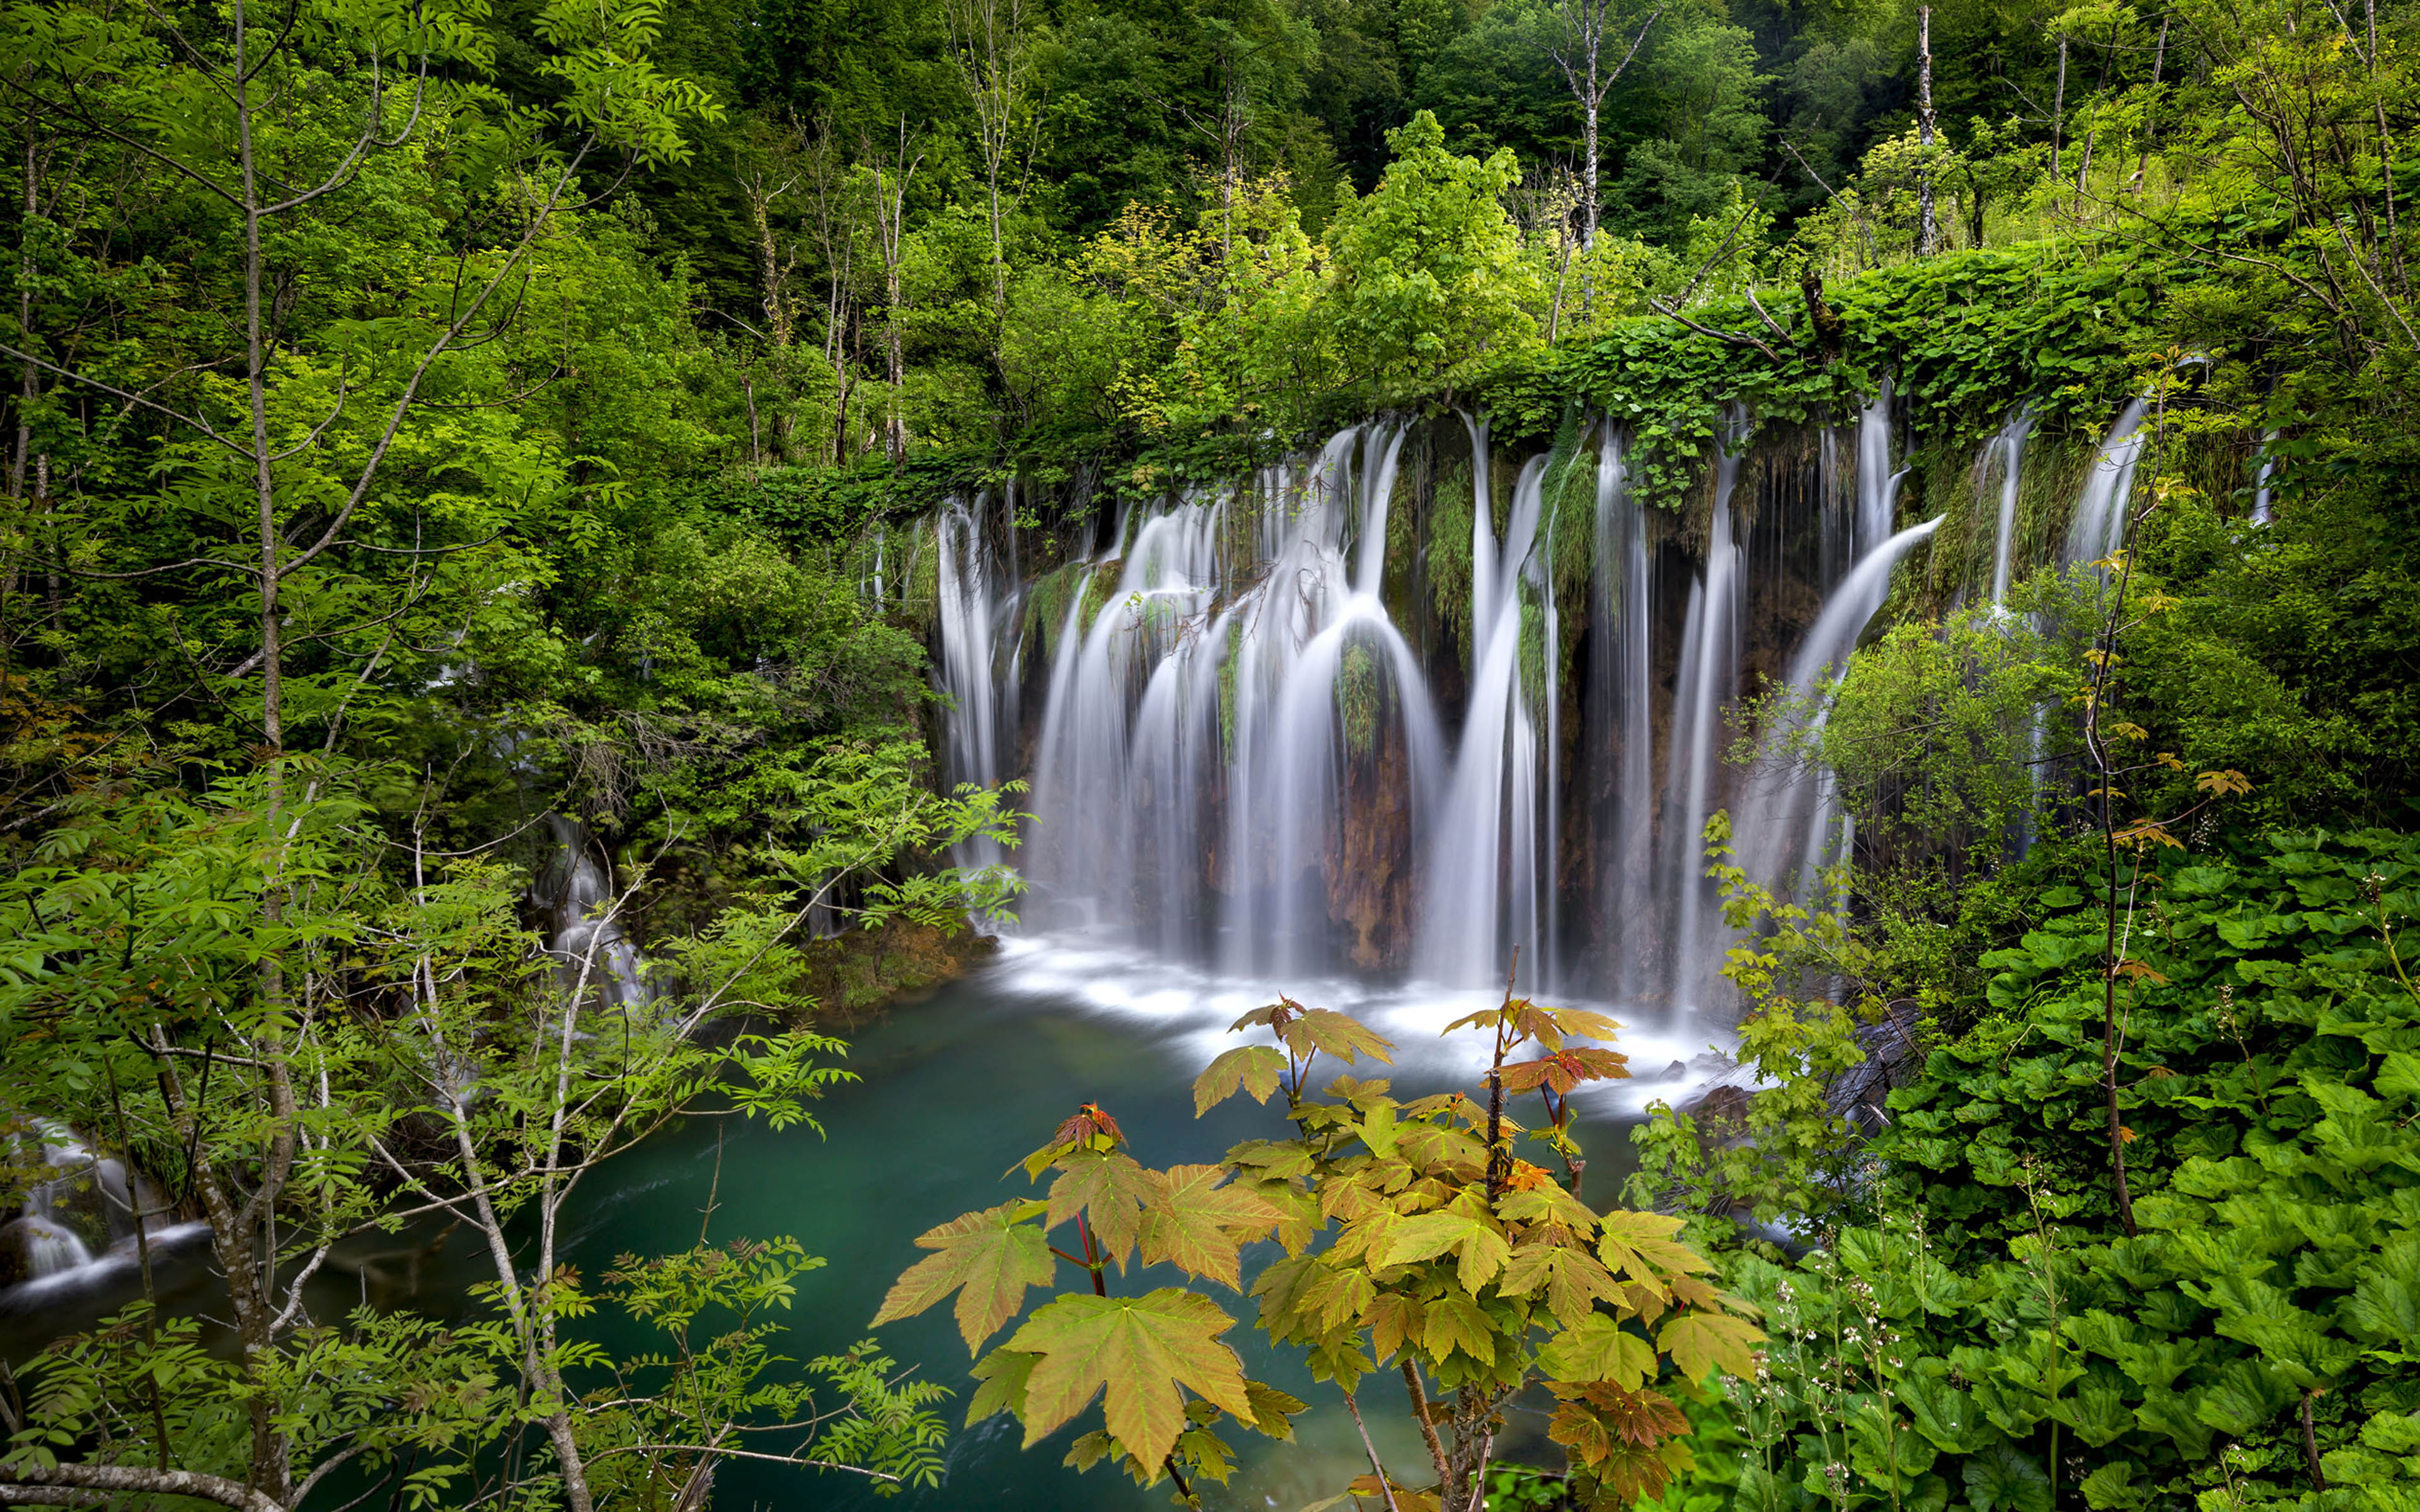 Descarga gratis la imagen Cascadas, Cascada, Bosque, Tierra/naturaleza, Lago De Plitvice en el escritorio de tu PC